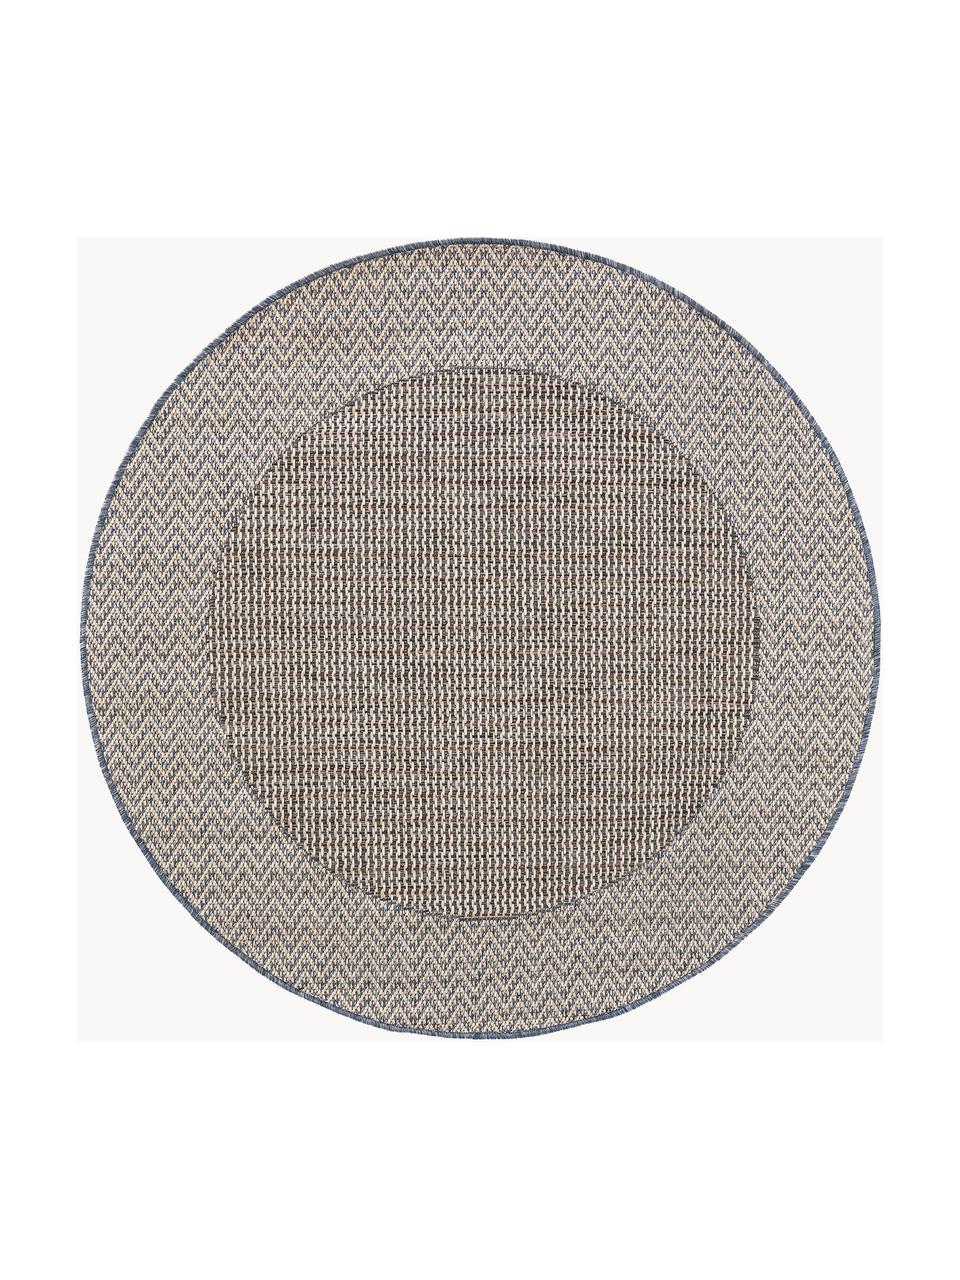 Kulatý interiérový/exteriérový koberec River, 100 % polypropylen, Krémově bílá, modrá, Ø 130 cm (velikost M)